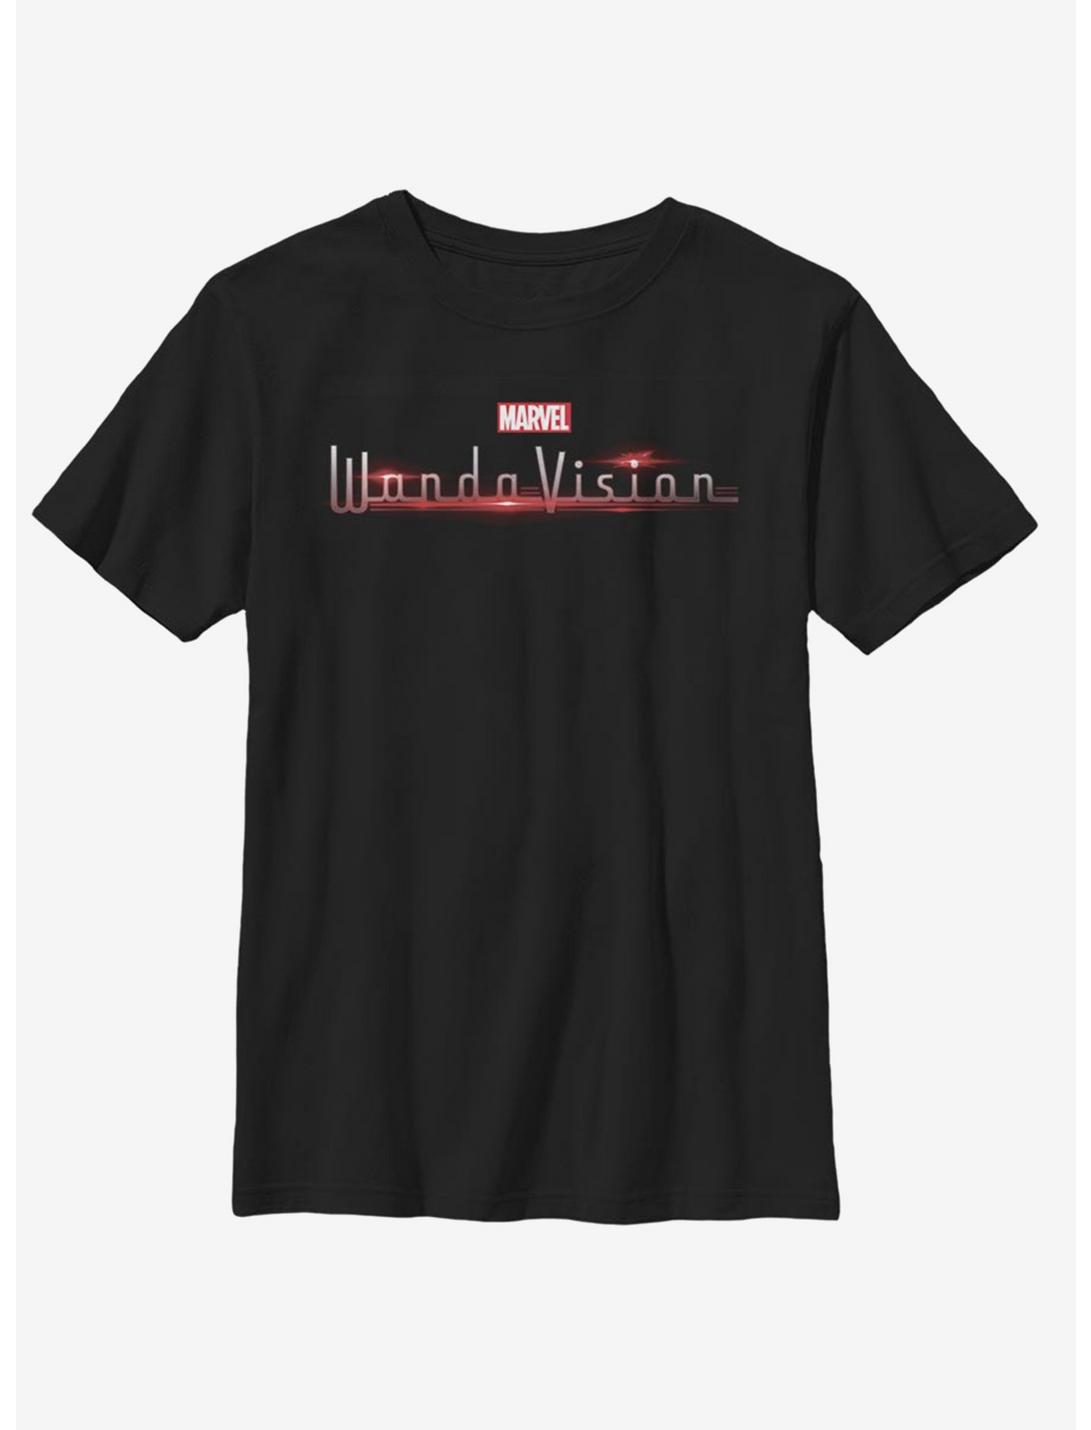 Marvel WandaVision Youth T-Shirt, BLACK, hi-res